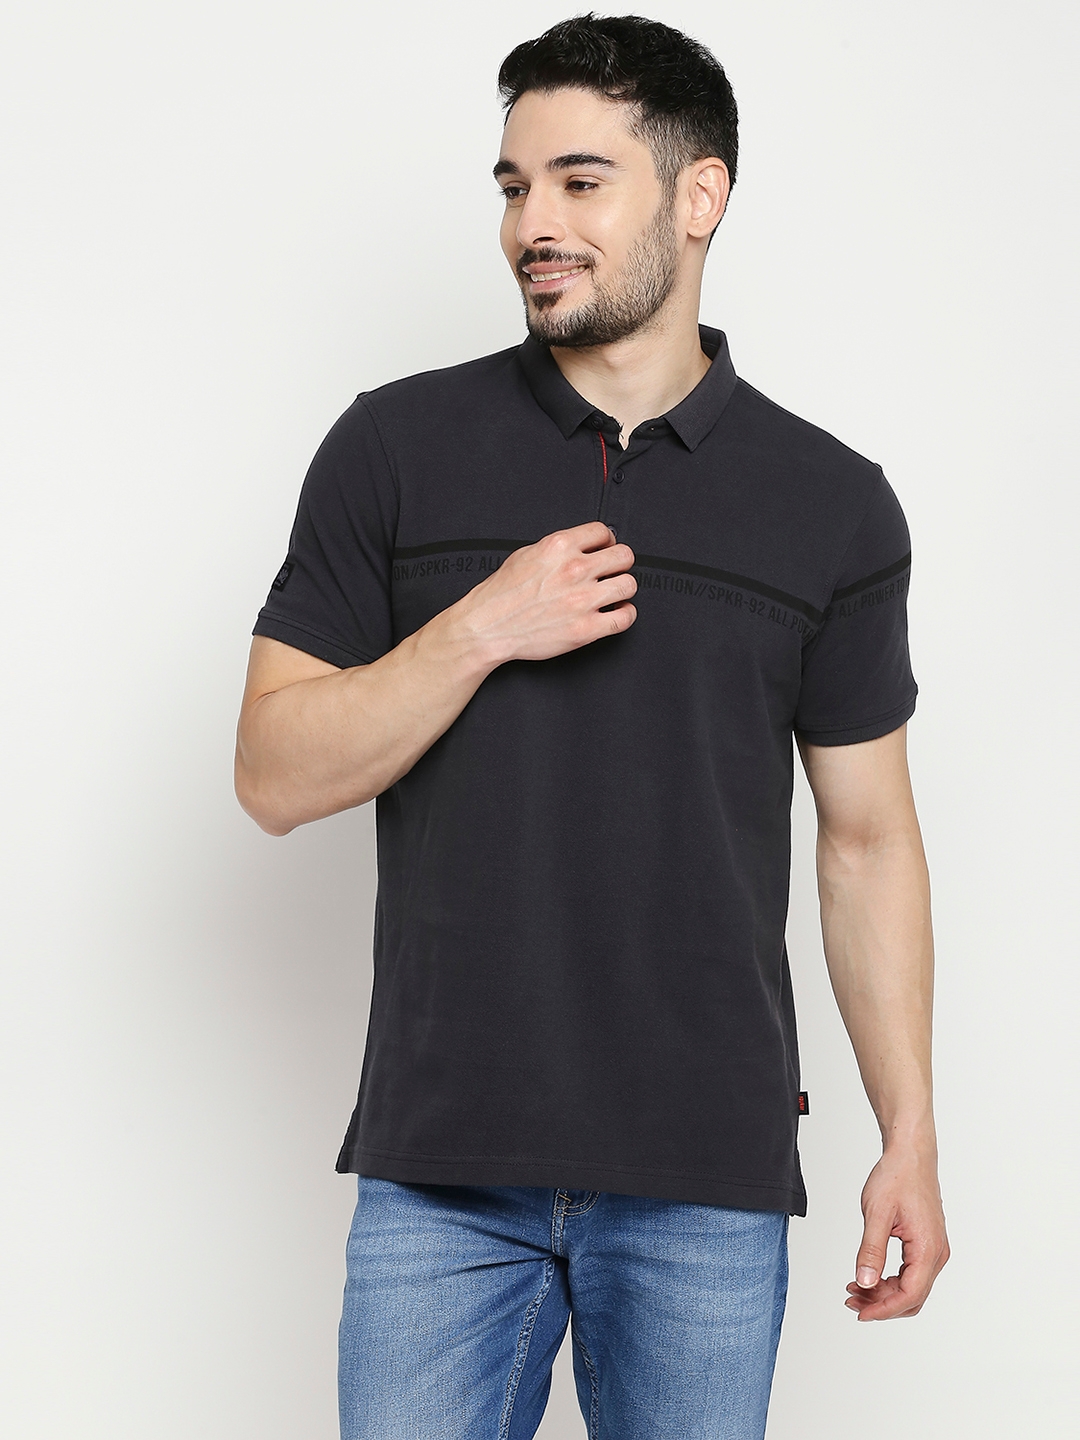 Spykar Slate Grey Cotton Half Sleeve Printed Casual T-Shirt For Men